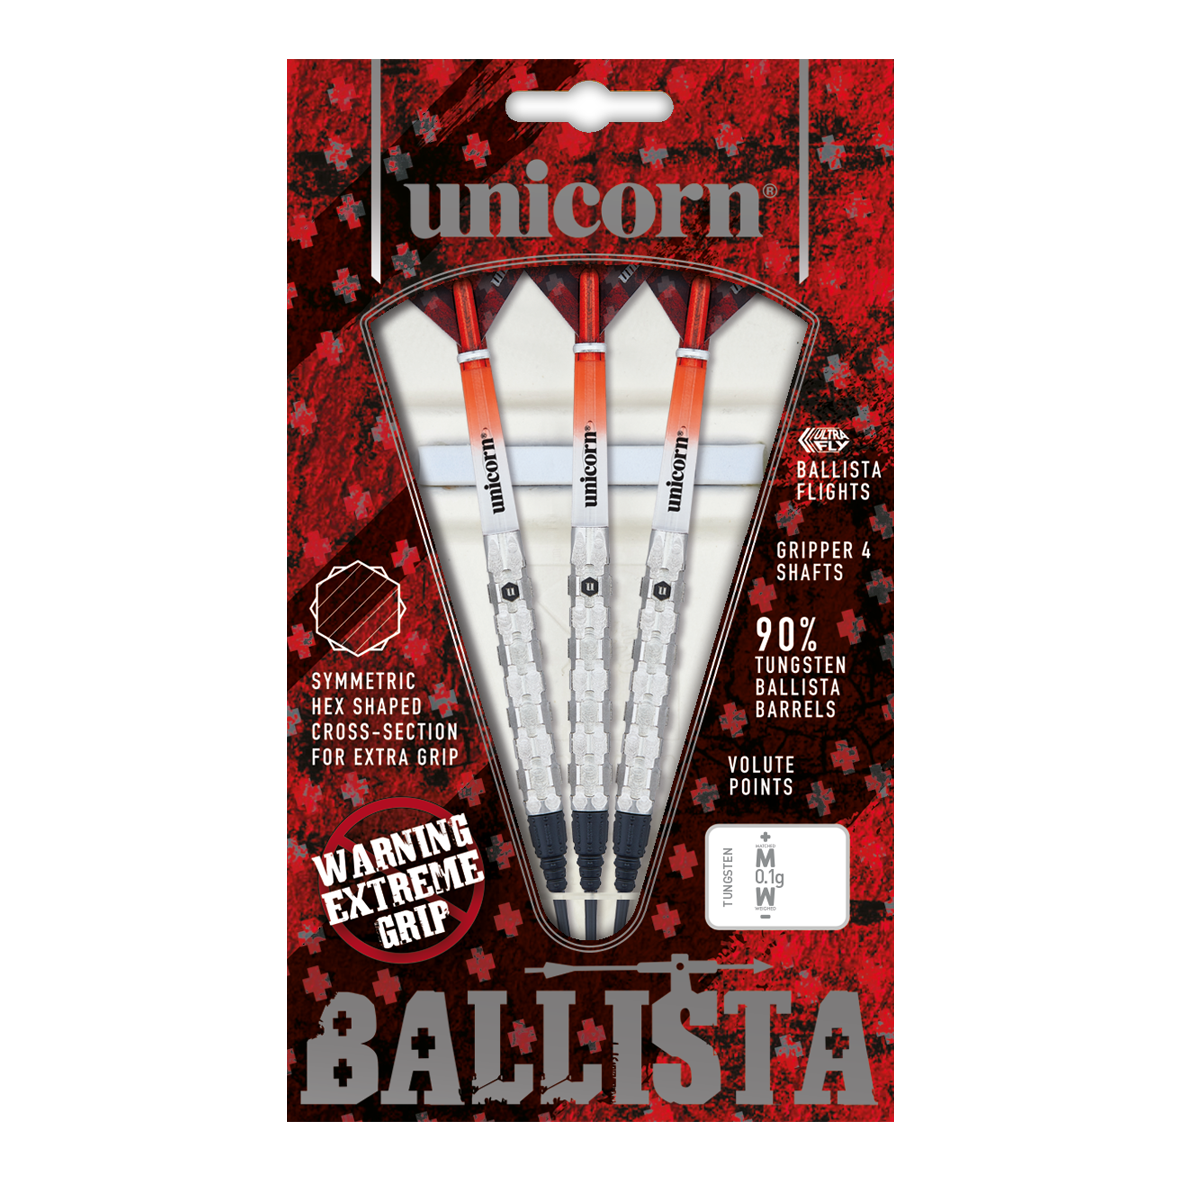 Fléchettes souples Unicorn Ballista Style 1